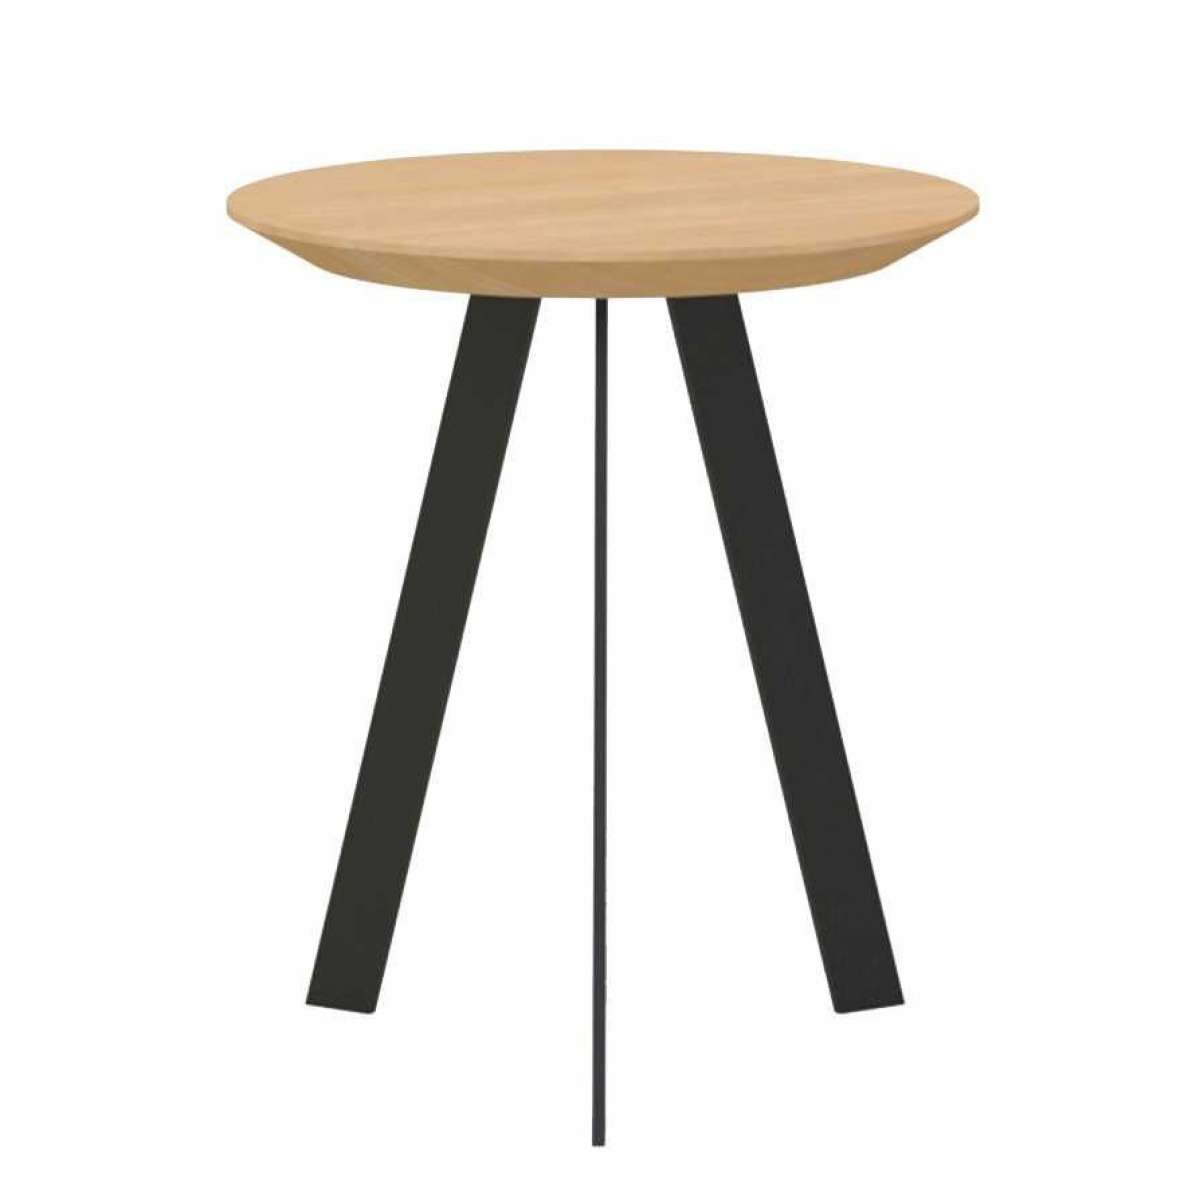 https://www.fundesign.nl/media/catalog/product/n/e/new-co-coffee-table-400-zwart-onderstel-naturel-3062-studio-henk-604dccfa800d7467225b567b43f1b7b3.jpg